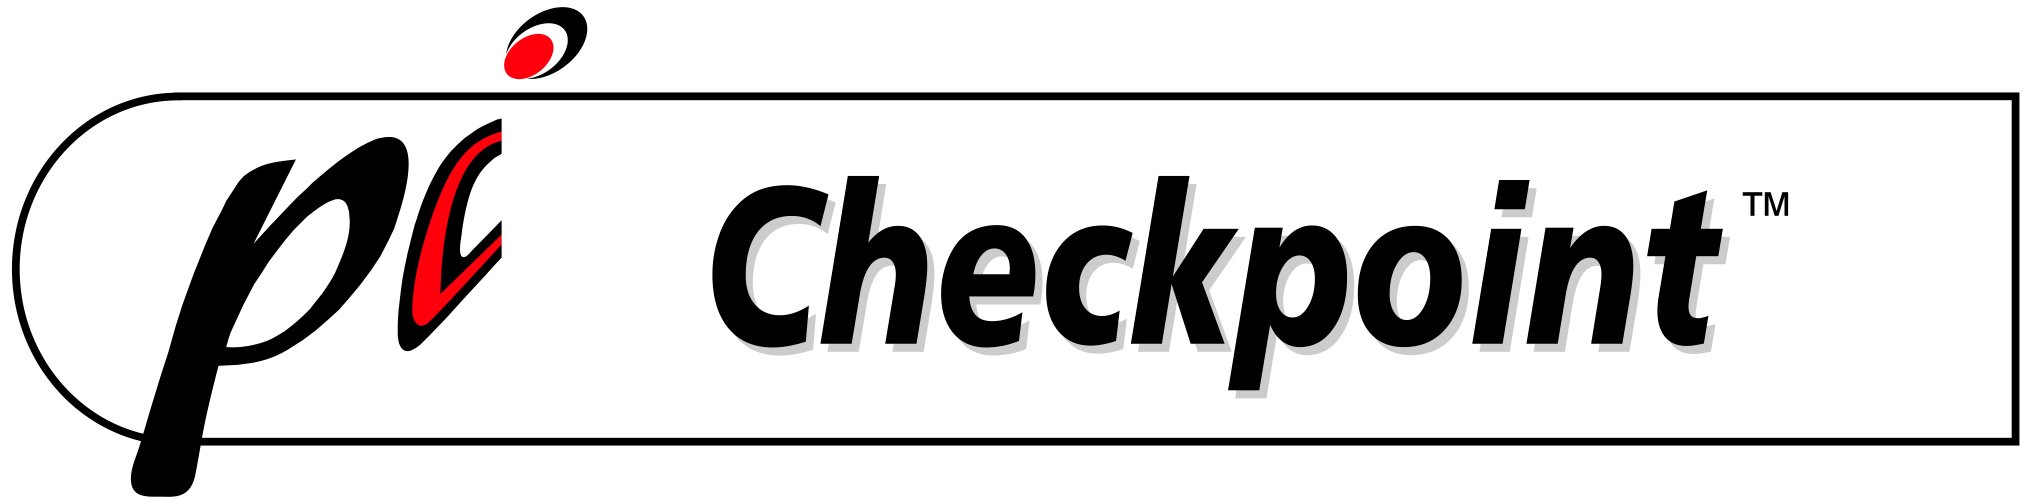 CheckPoint_Logo.jpg